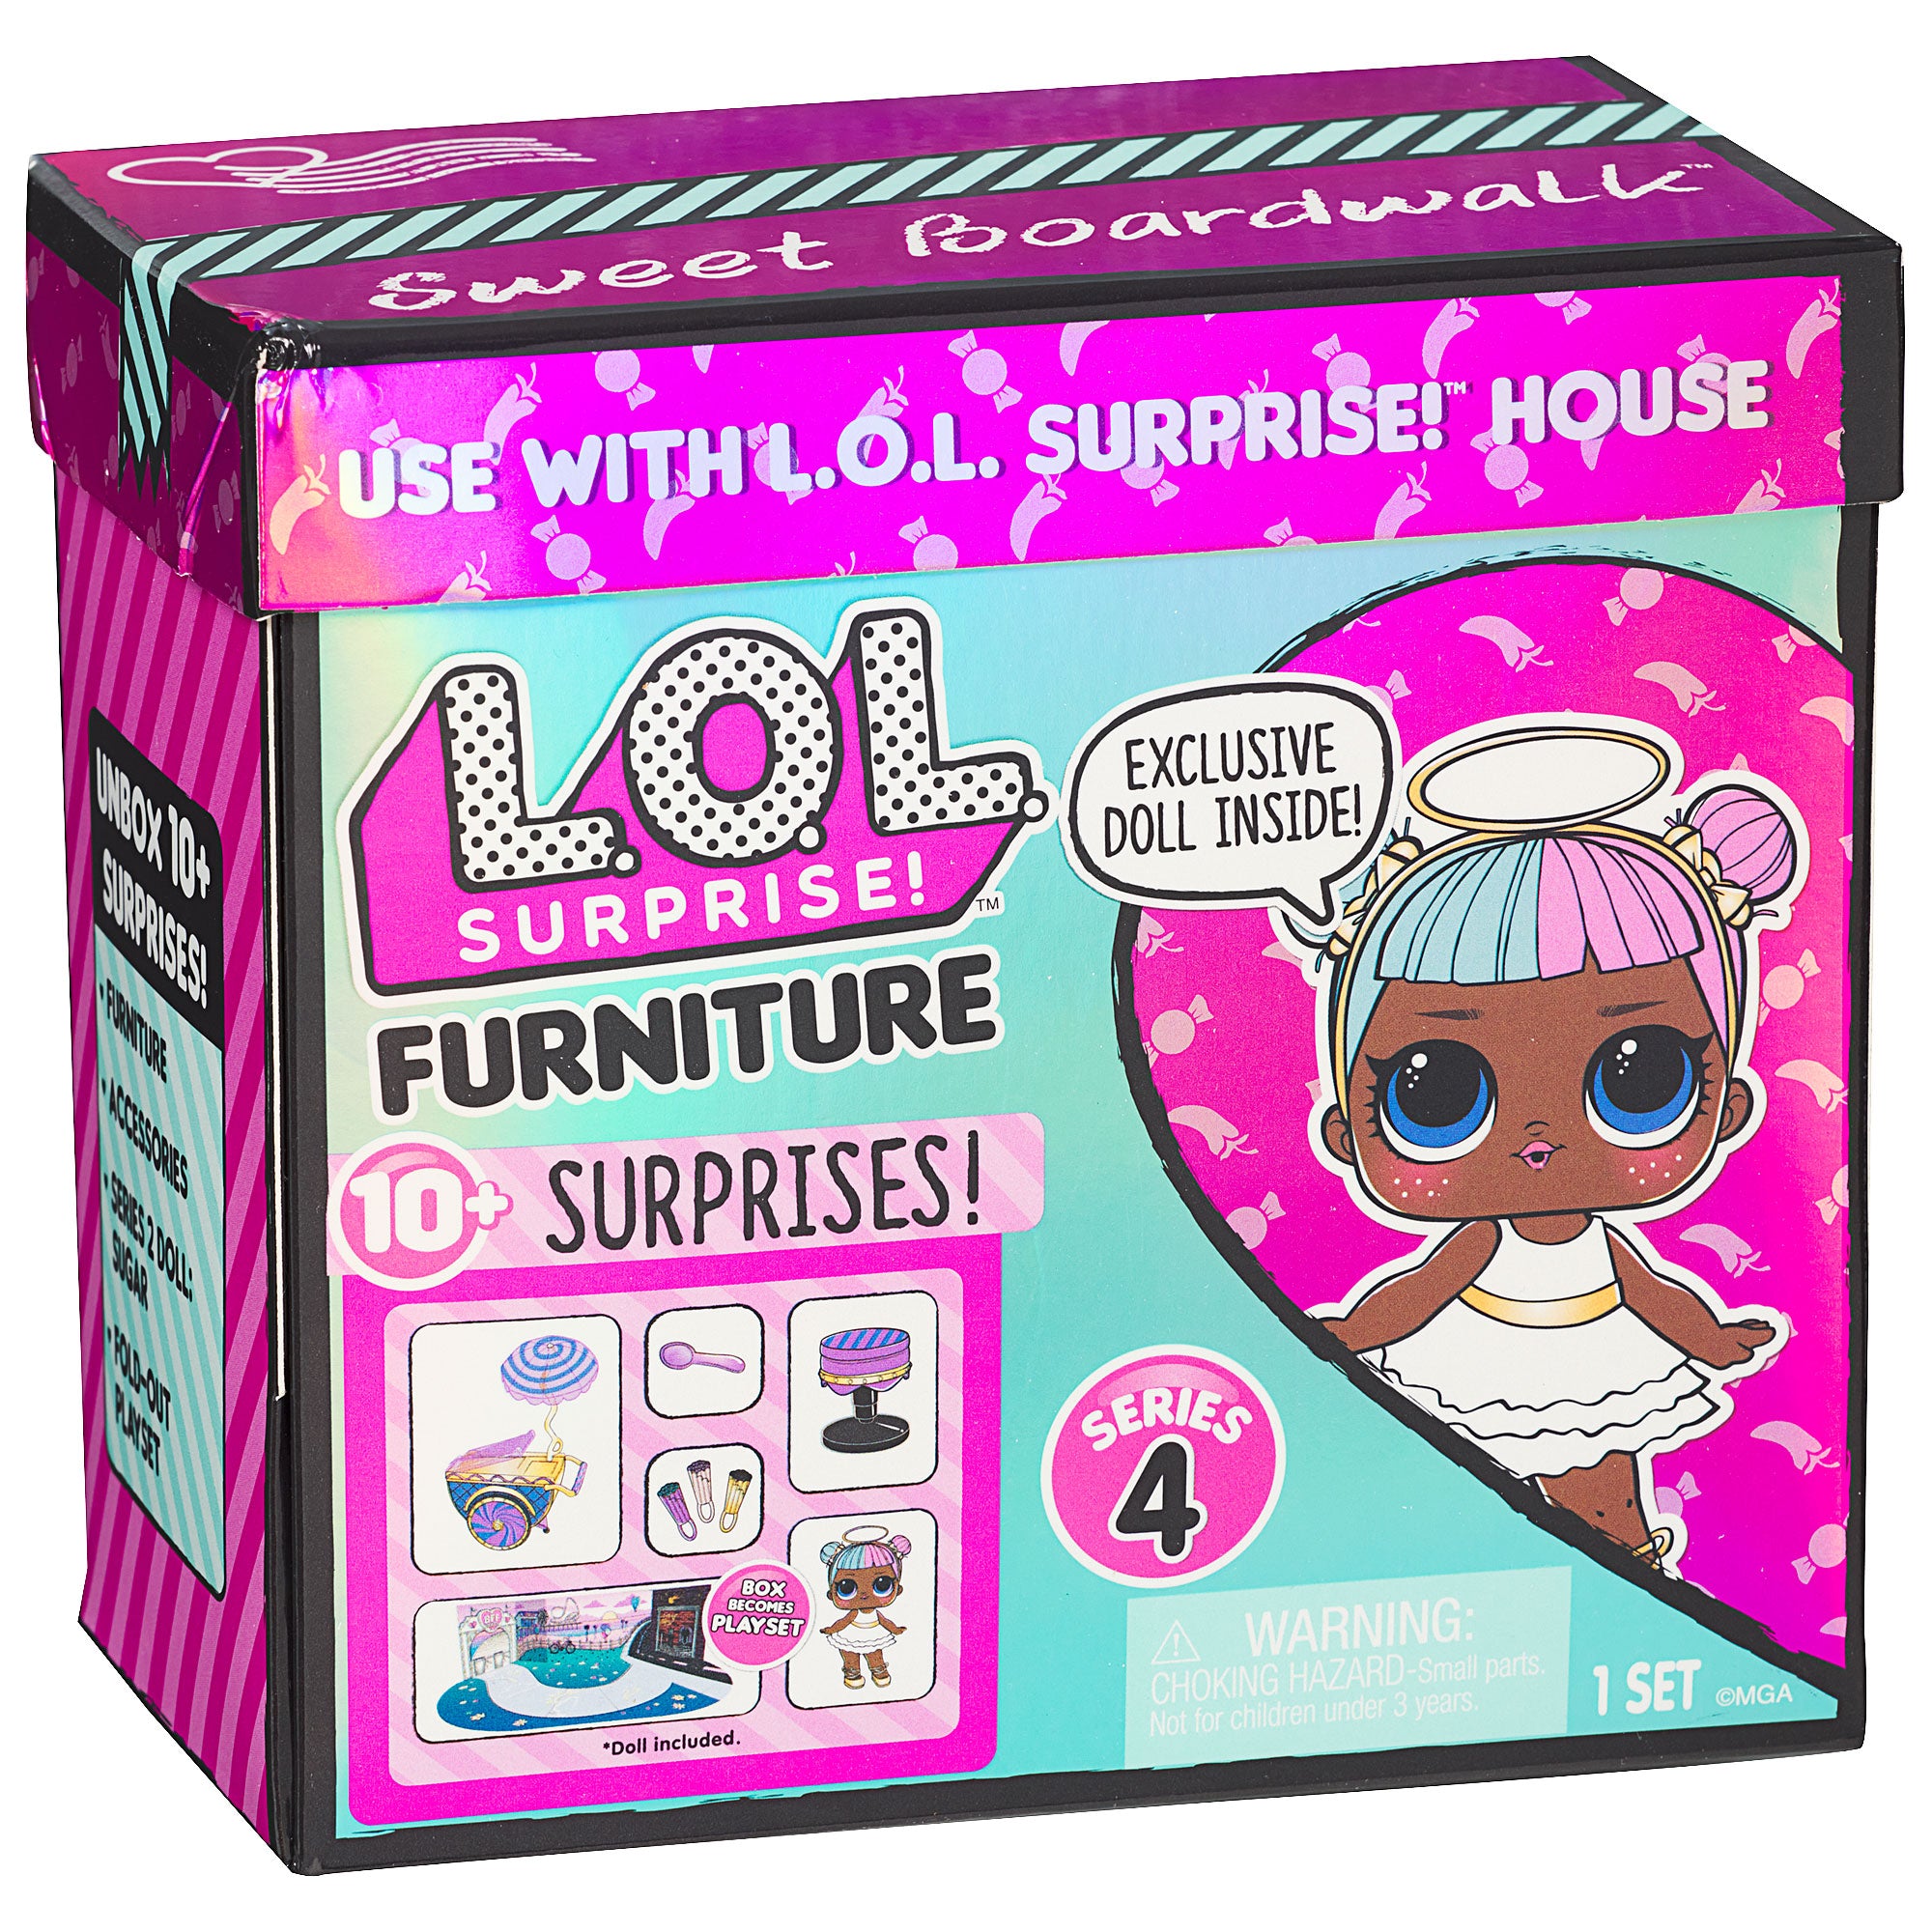 L.O.L. Surprise! Furniture Dolls